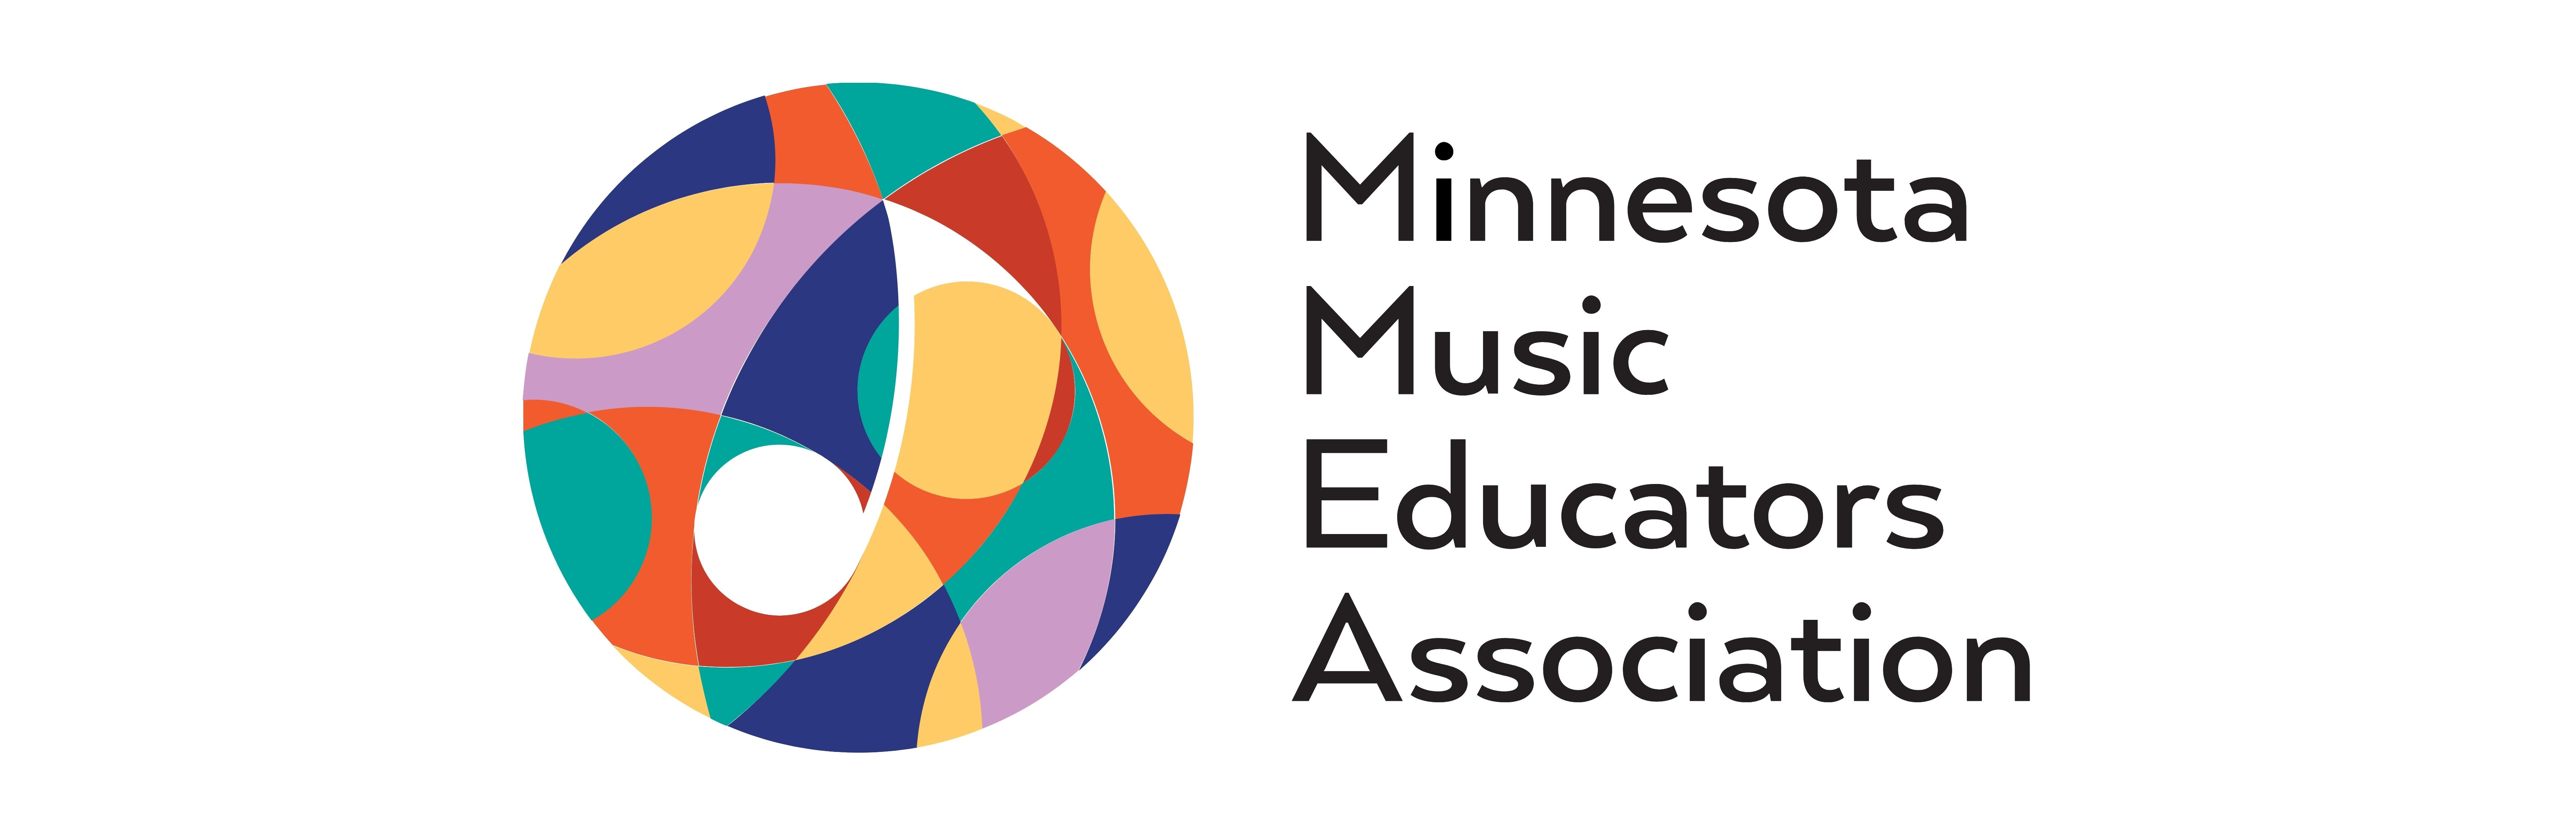 Minnesota Music Educators Association